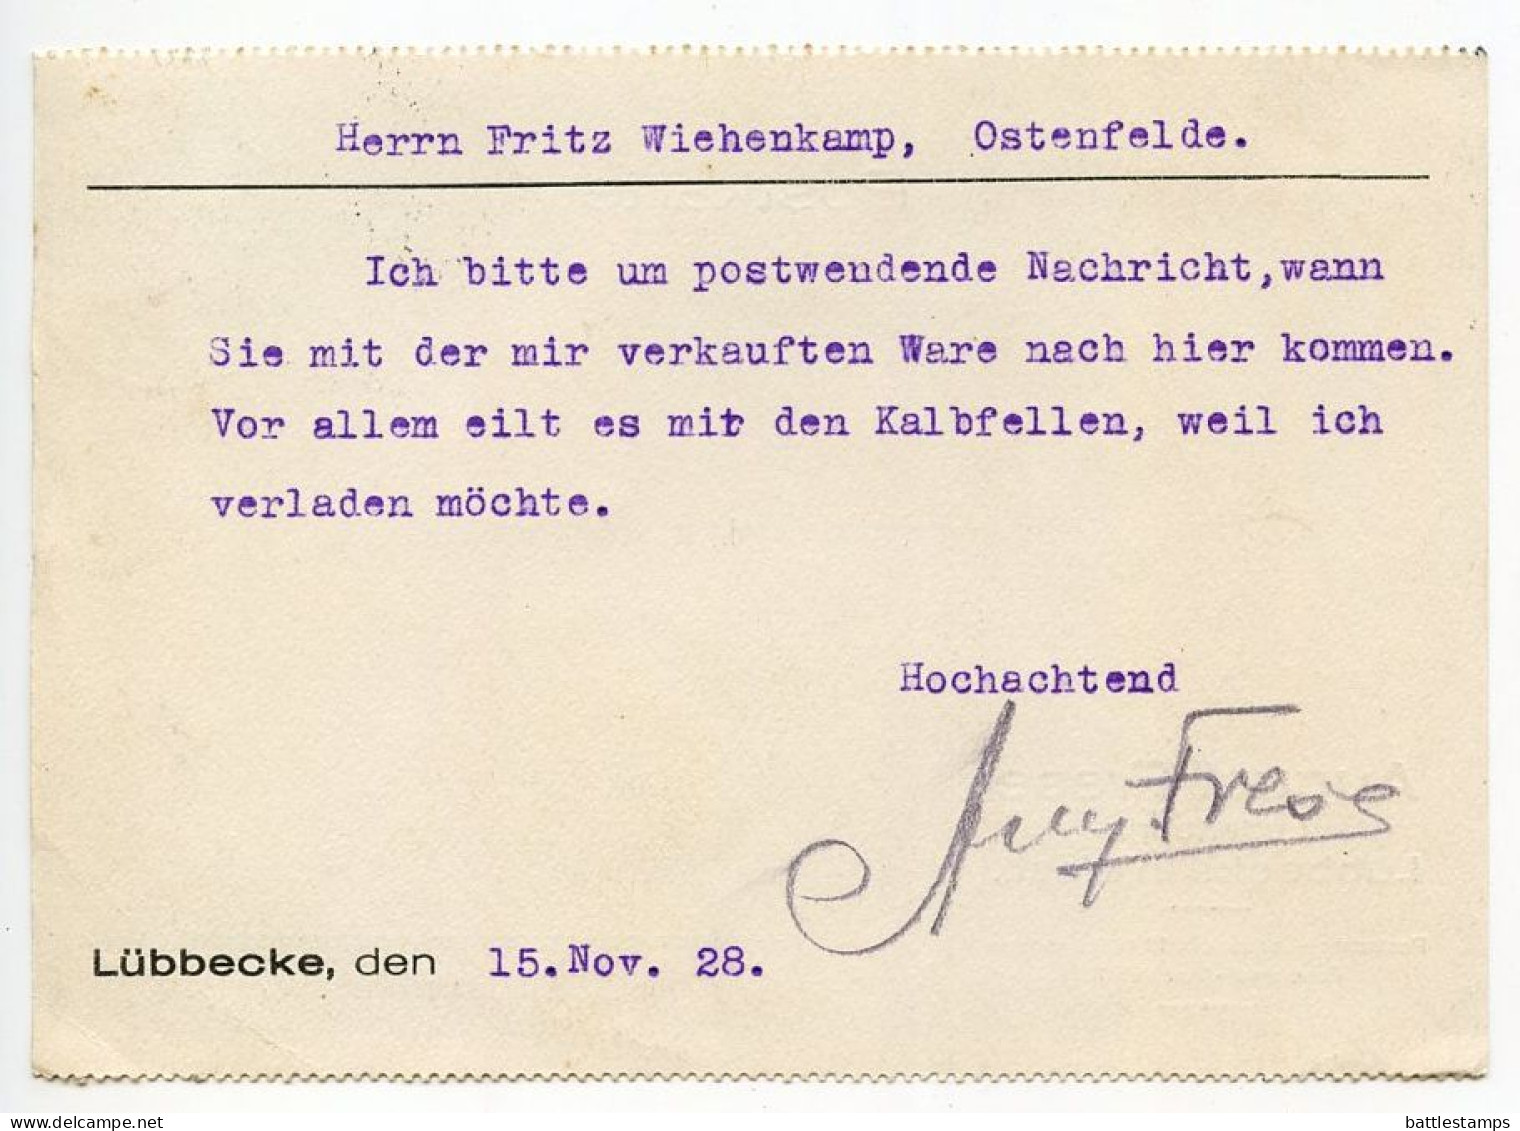 Germany 1928 Postcard; Lübbecke (Westf.) - August Frese, Lederfabrik To Ostenfelde; 8pf. Friedrich Ebert - Cartas & Documentos